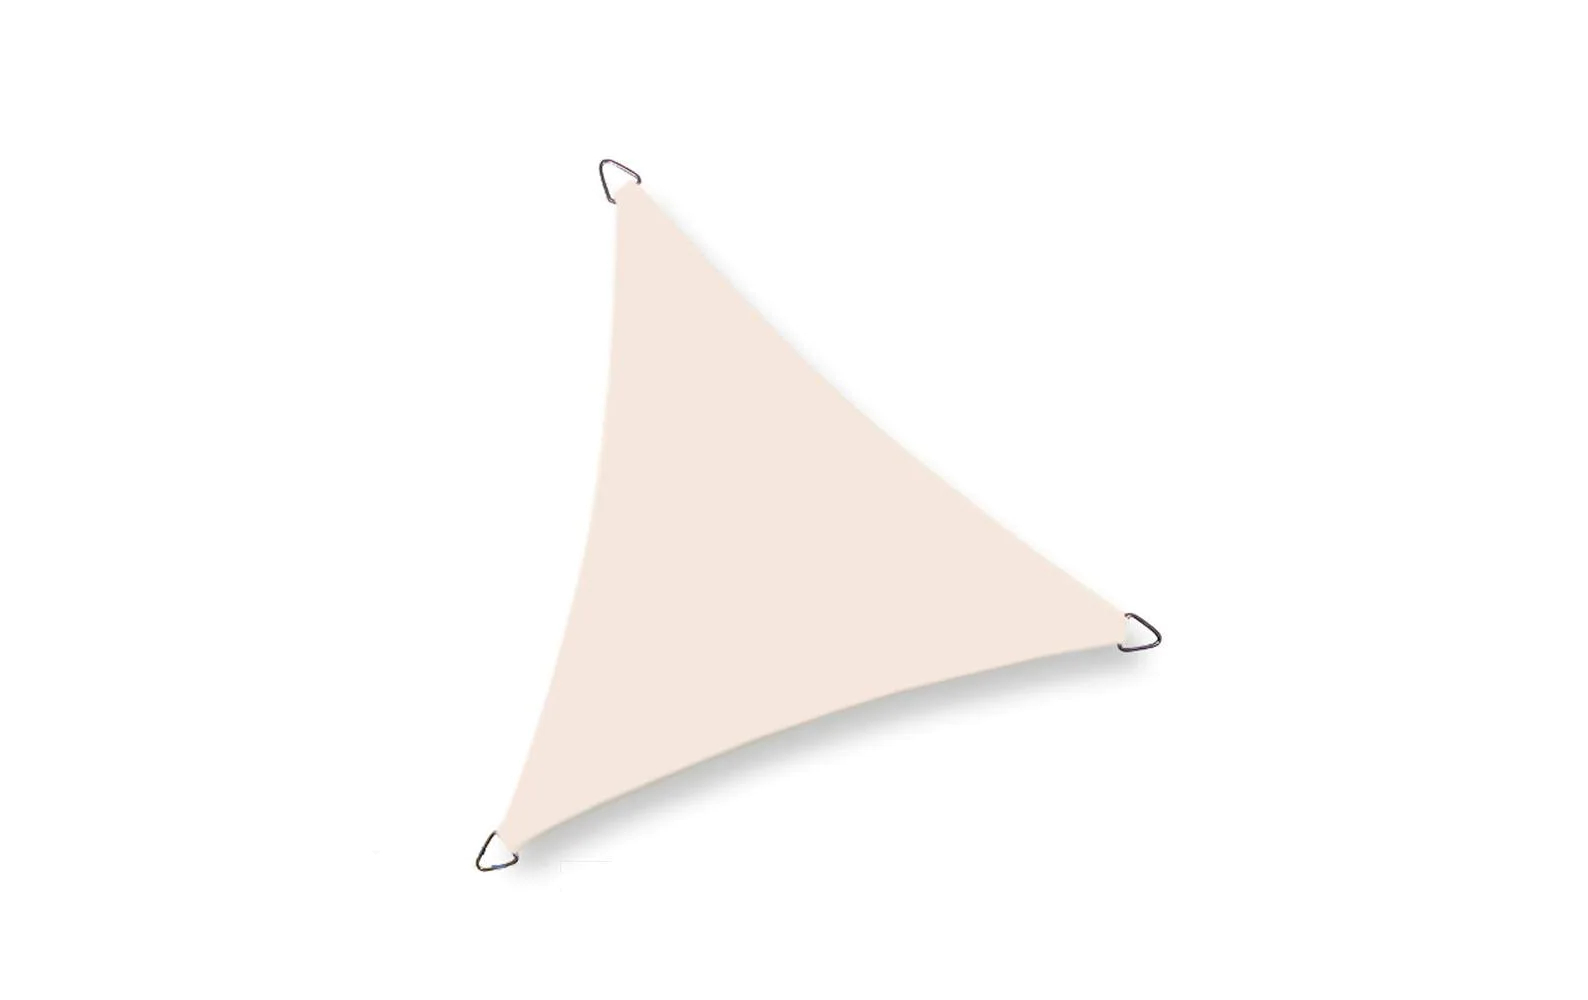 Nesling Sonnensegel Dreamsail 500 cm, Dreieck, Tiefe: 500 cm, Breite: 500 cm, Farbe: Beige, Form: Dreieck